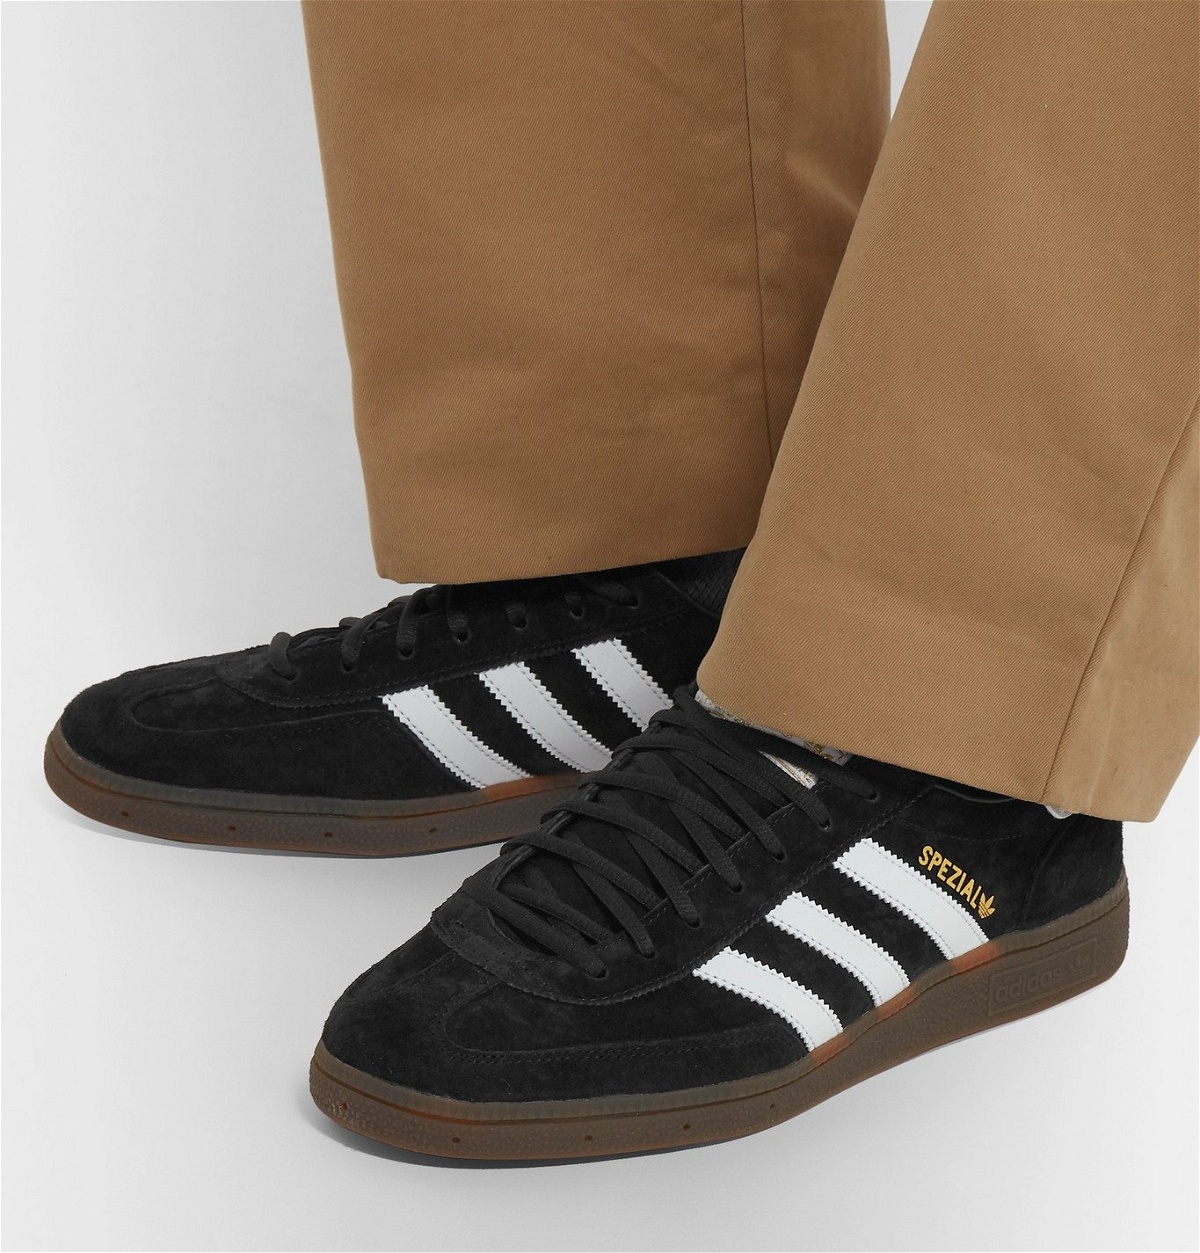 adidas - Handball Spezial Suede Leather Sneakers - Black adidas Originals by Alexander Wang